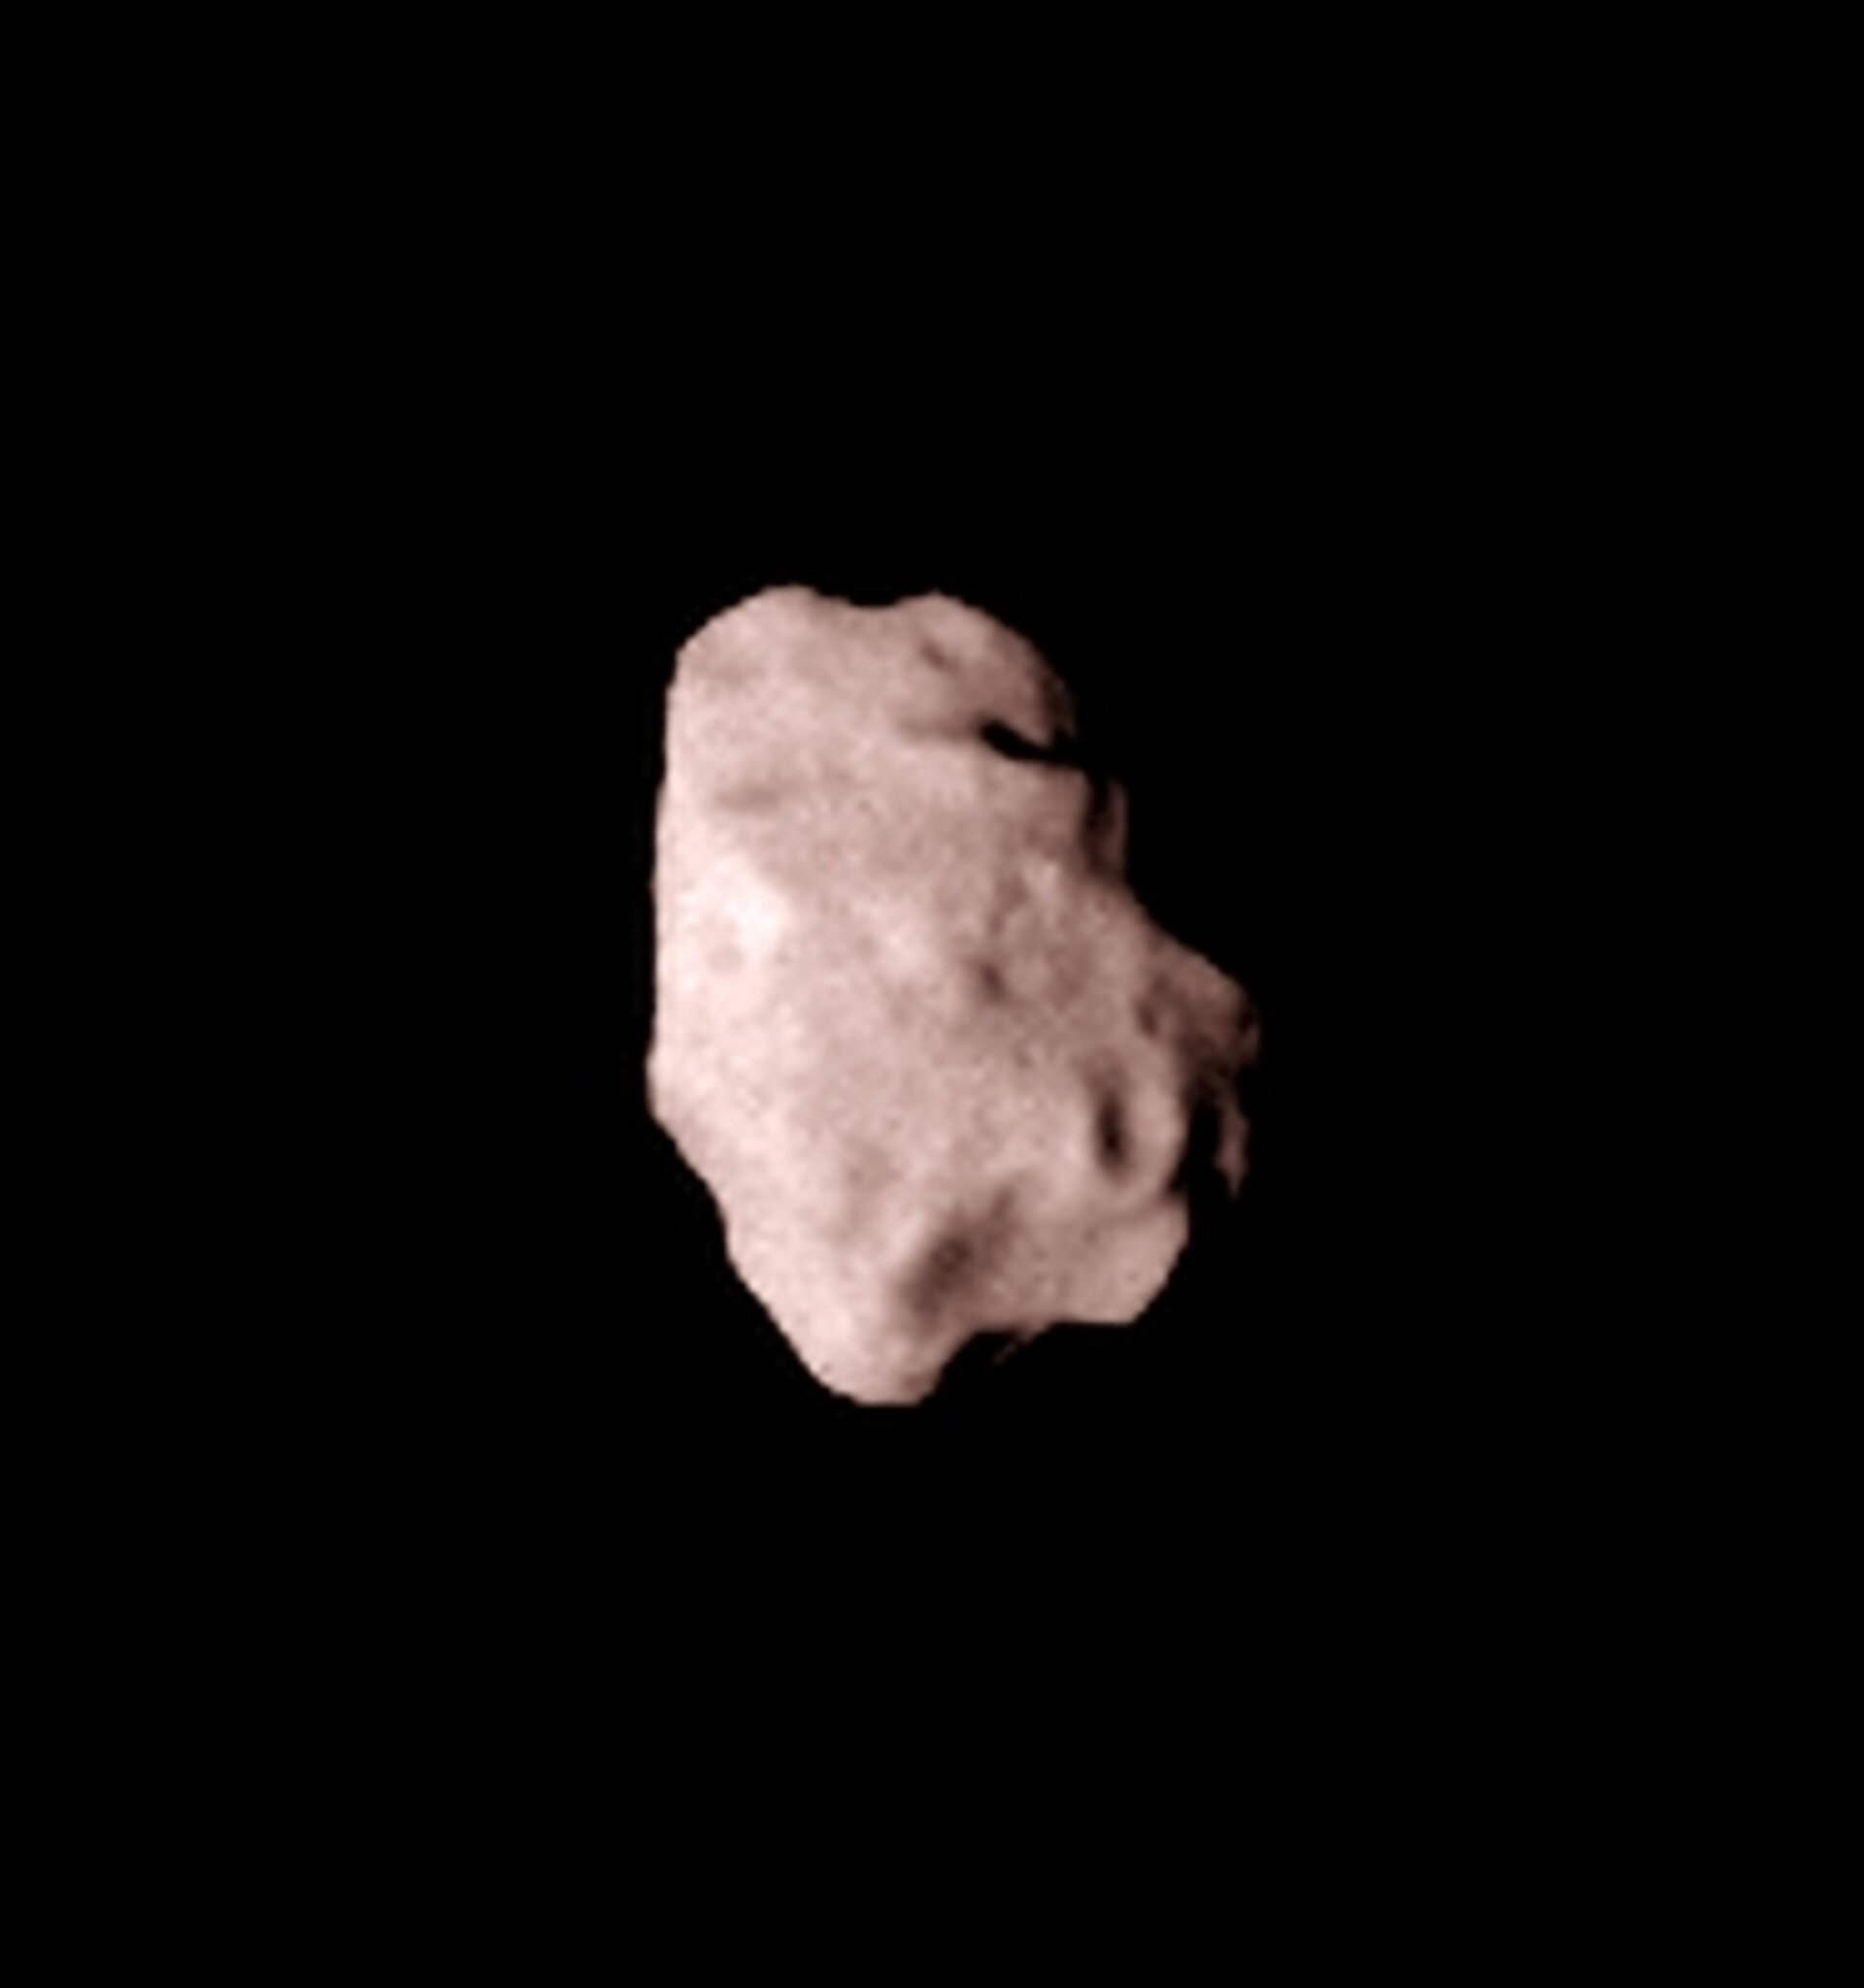 L’astéroïde Lutetia (dimensions de 132 x 101 x 76 kilomètres) tel que photographié en juillet 2010 par la sonde de l’ESA Rosetta lors de son voyage vers la comète Churyumov-Gerasimenko